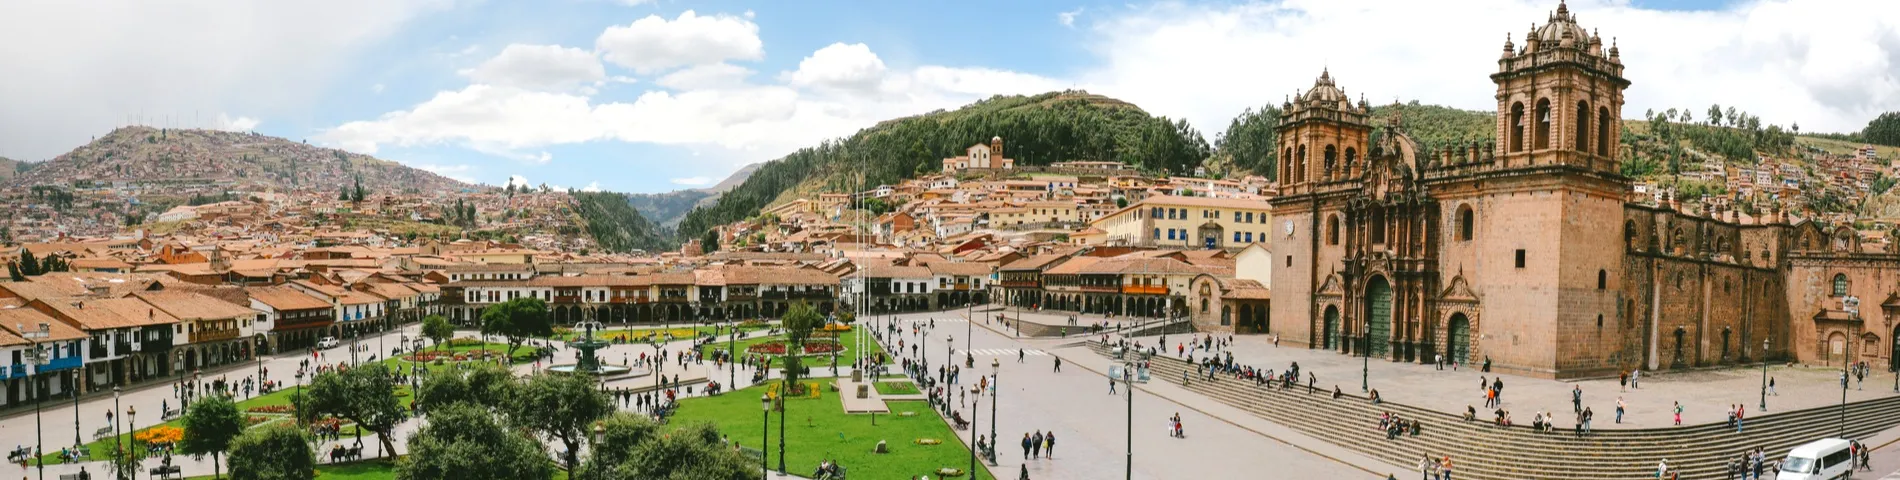 Cuzco - Standardowy